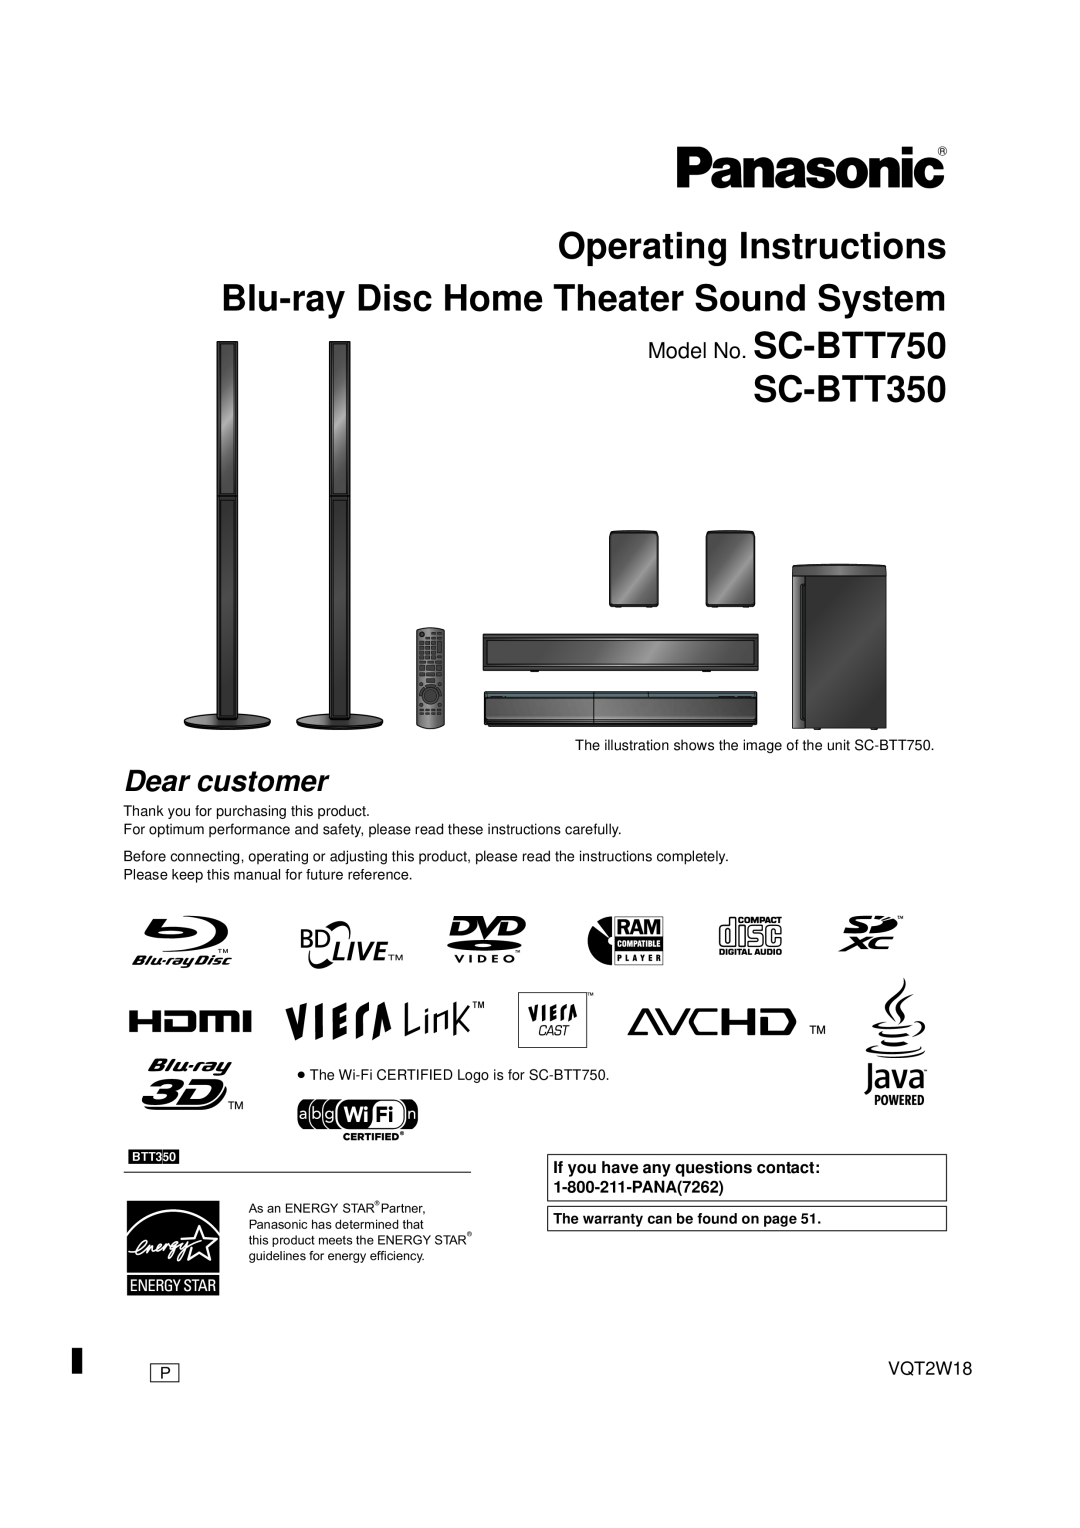 Panasonic warranty Operating Instructions, Blu-rayDisc Home Theater Sound System, SC-BTT350, Model No. SC-BTT750 